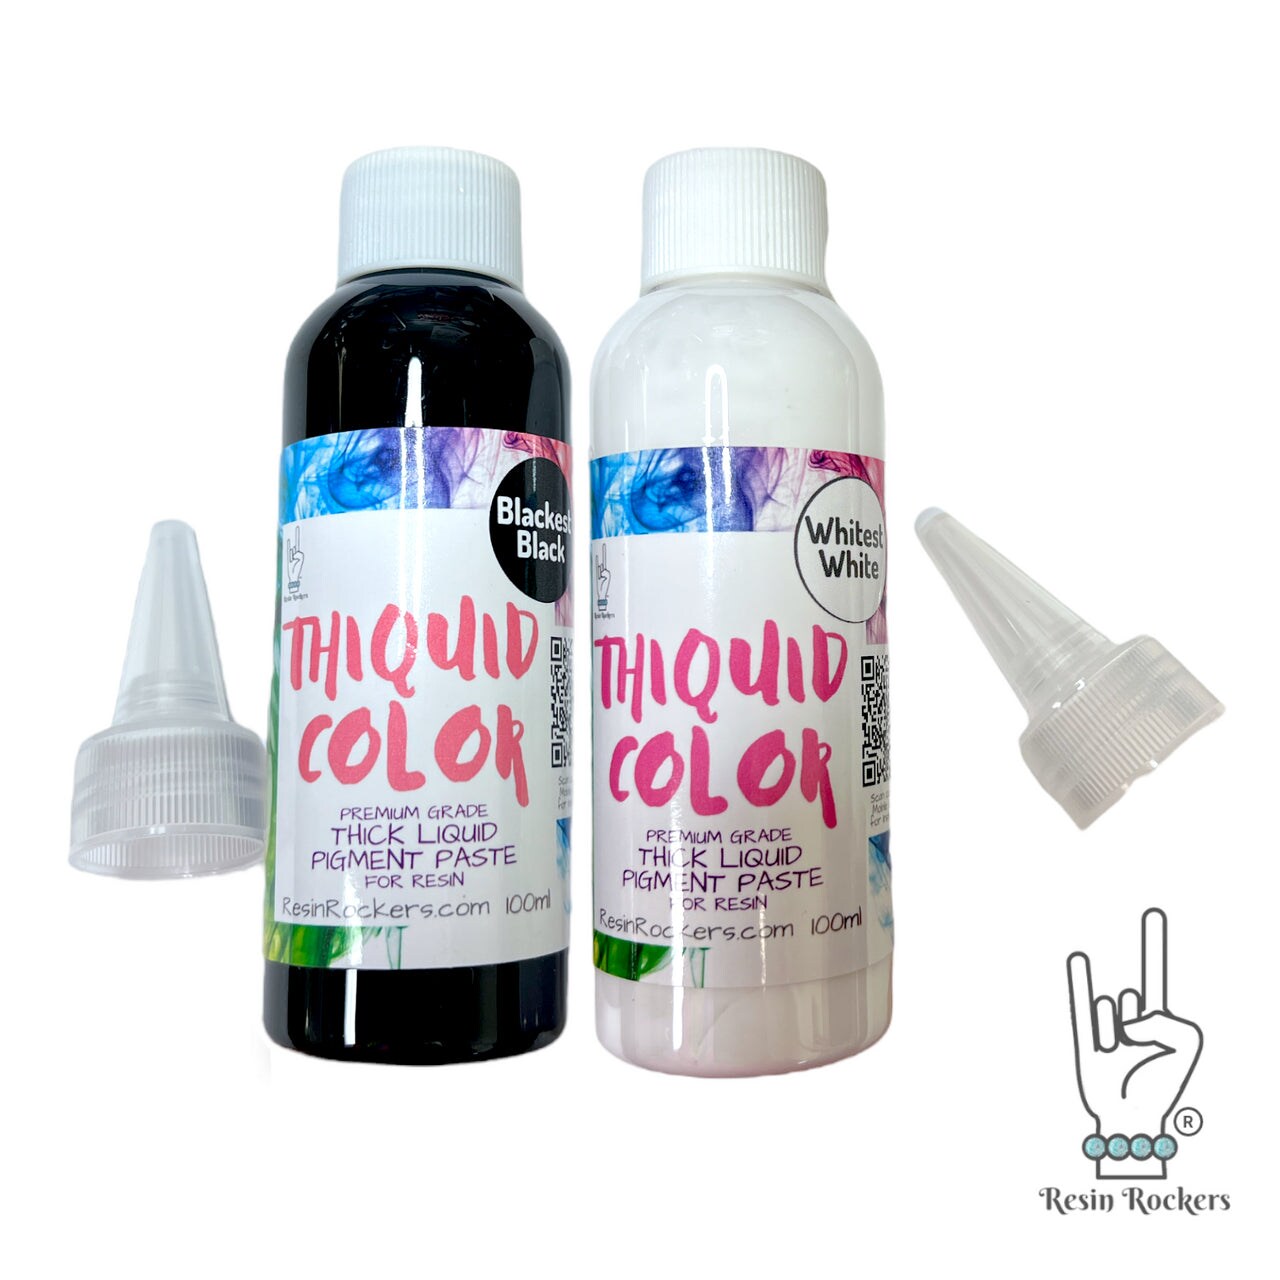 Black Liquid Pigment - Counter Top Epoxy